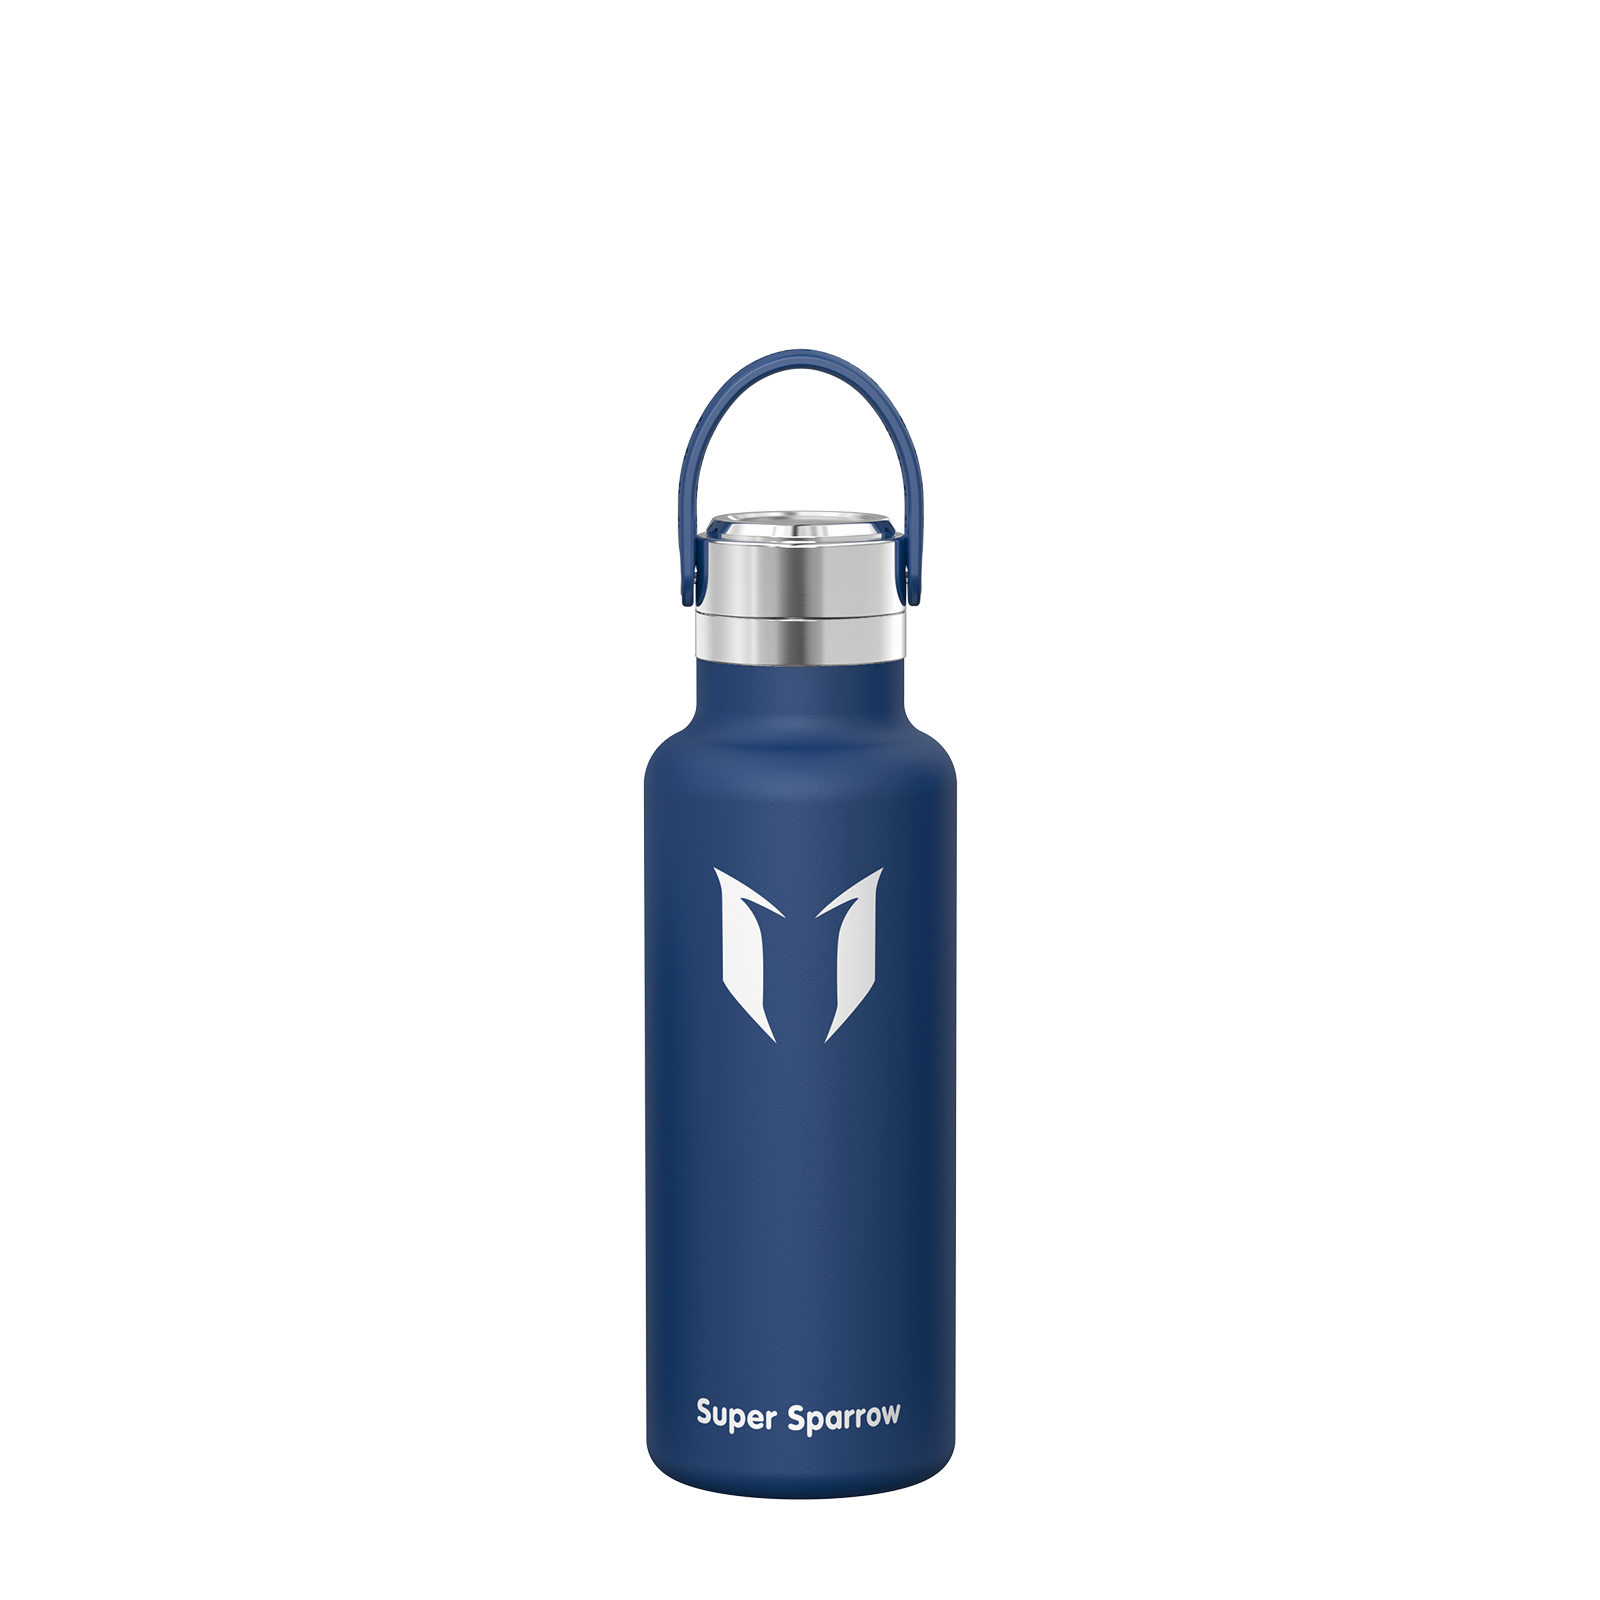 Super Sparrow Water Bottle Stainless Steel 18/10 - Ultralight Travel Mug -  500ml - Insulated Metal Water Bottle - BPA Free - Leakproof Drinks Bottle -  Flask for Gym, Sports, School, Adult, Office. 